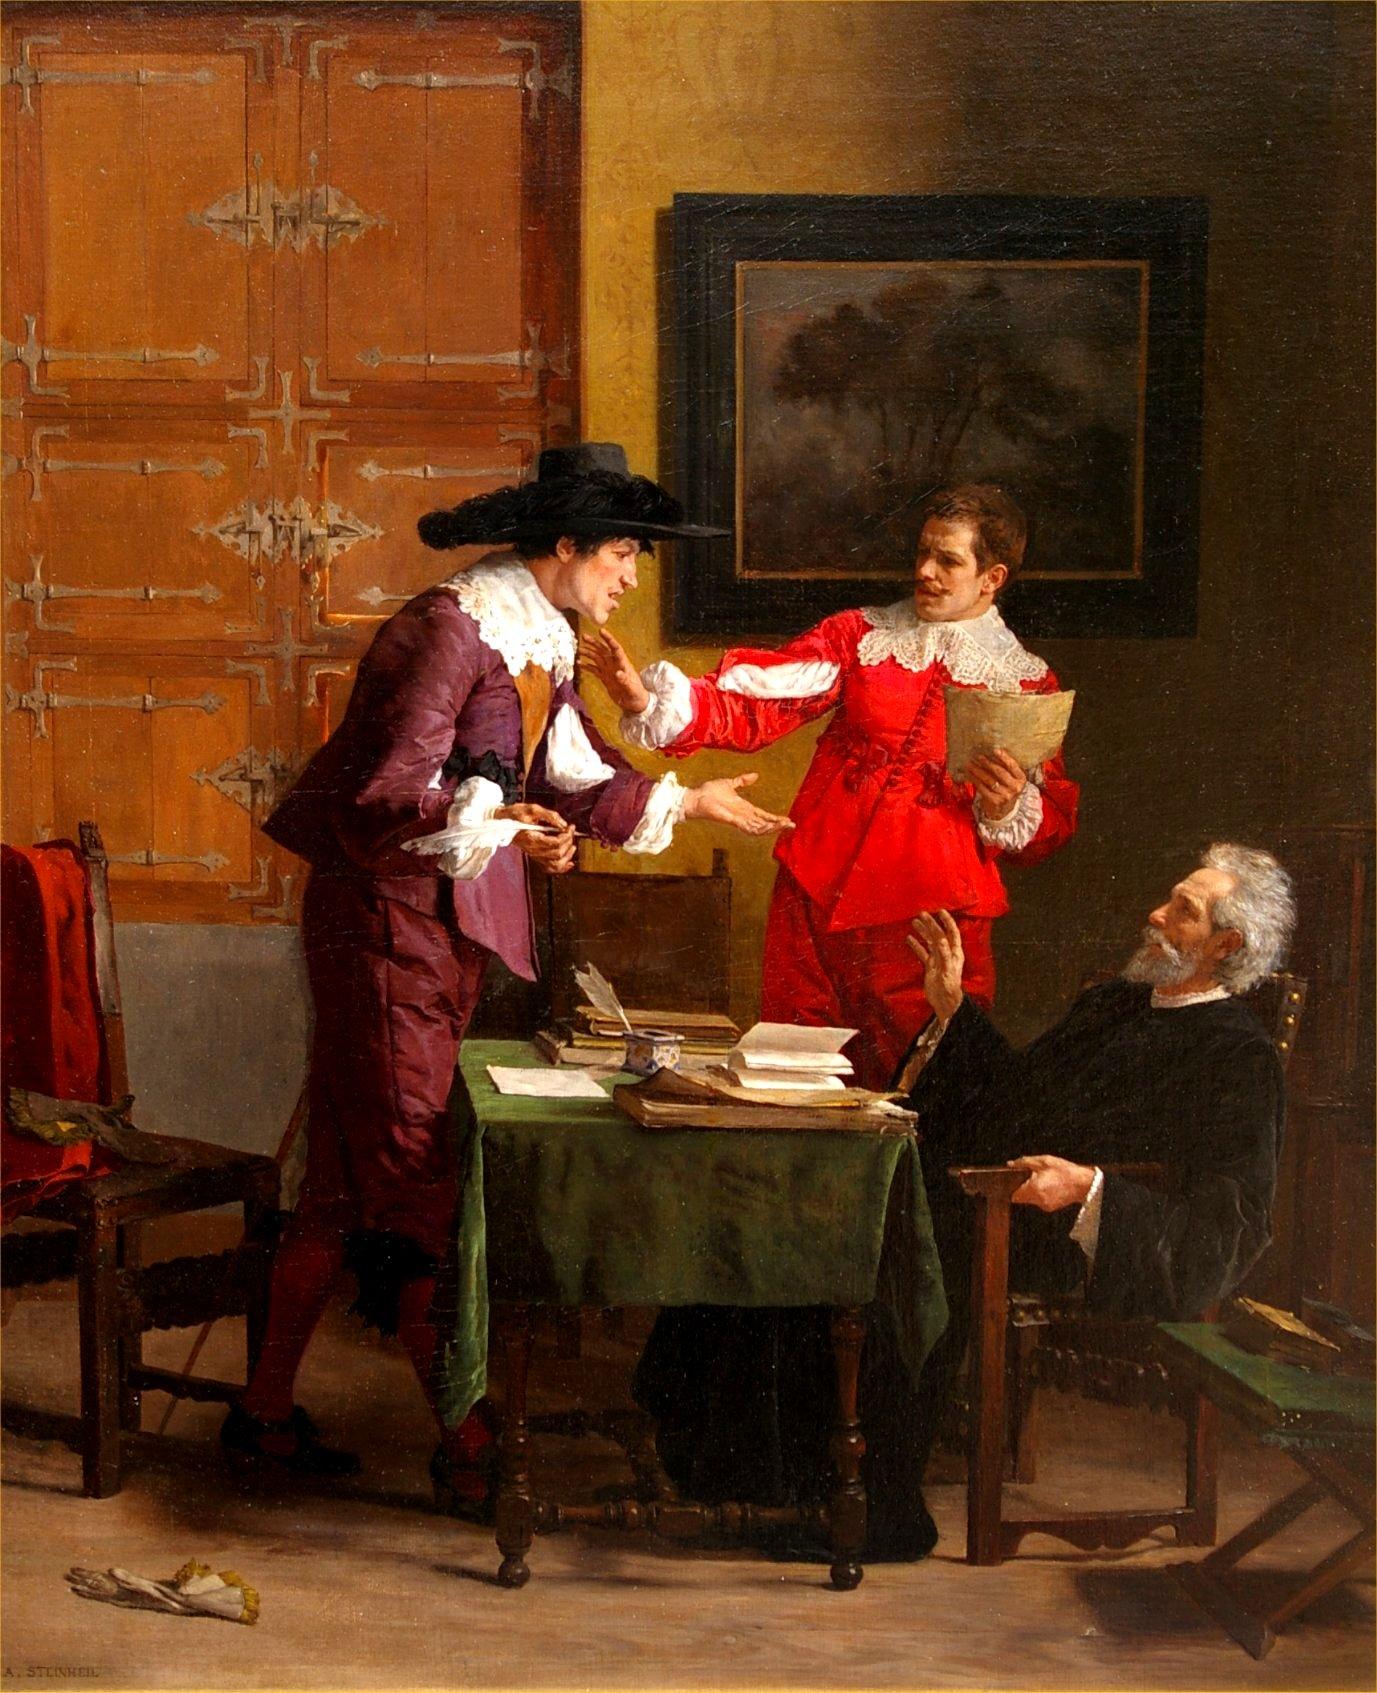 The Dispute - Painting by Louis Charles Auguste Steinheil